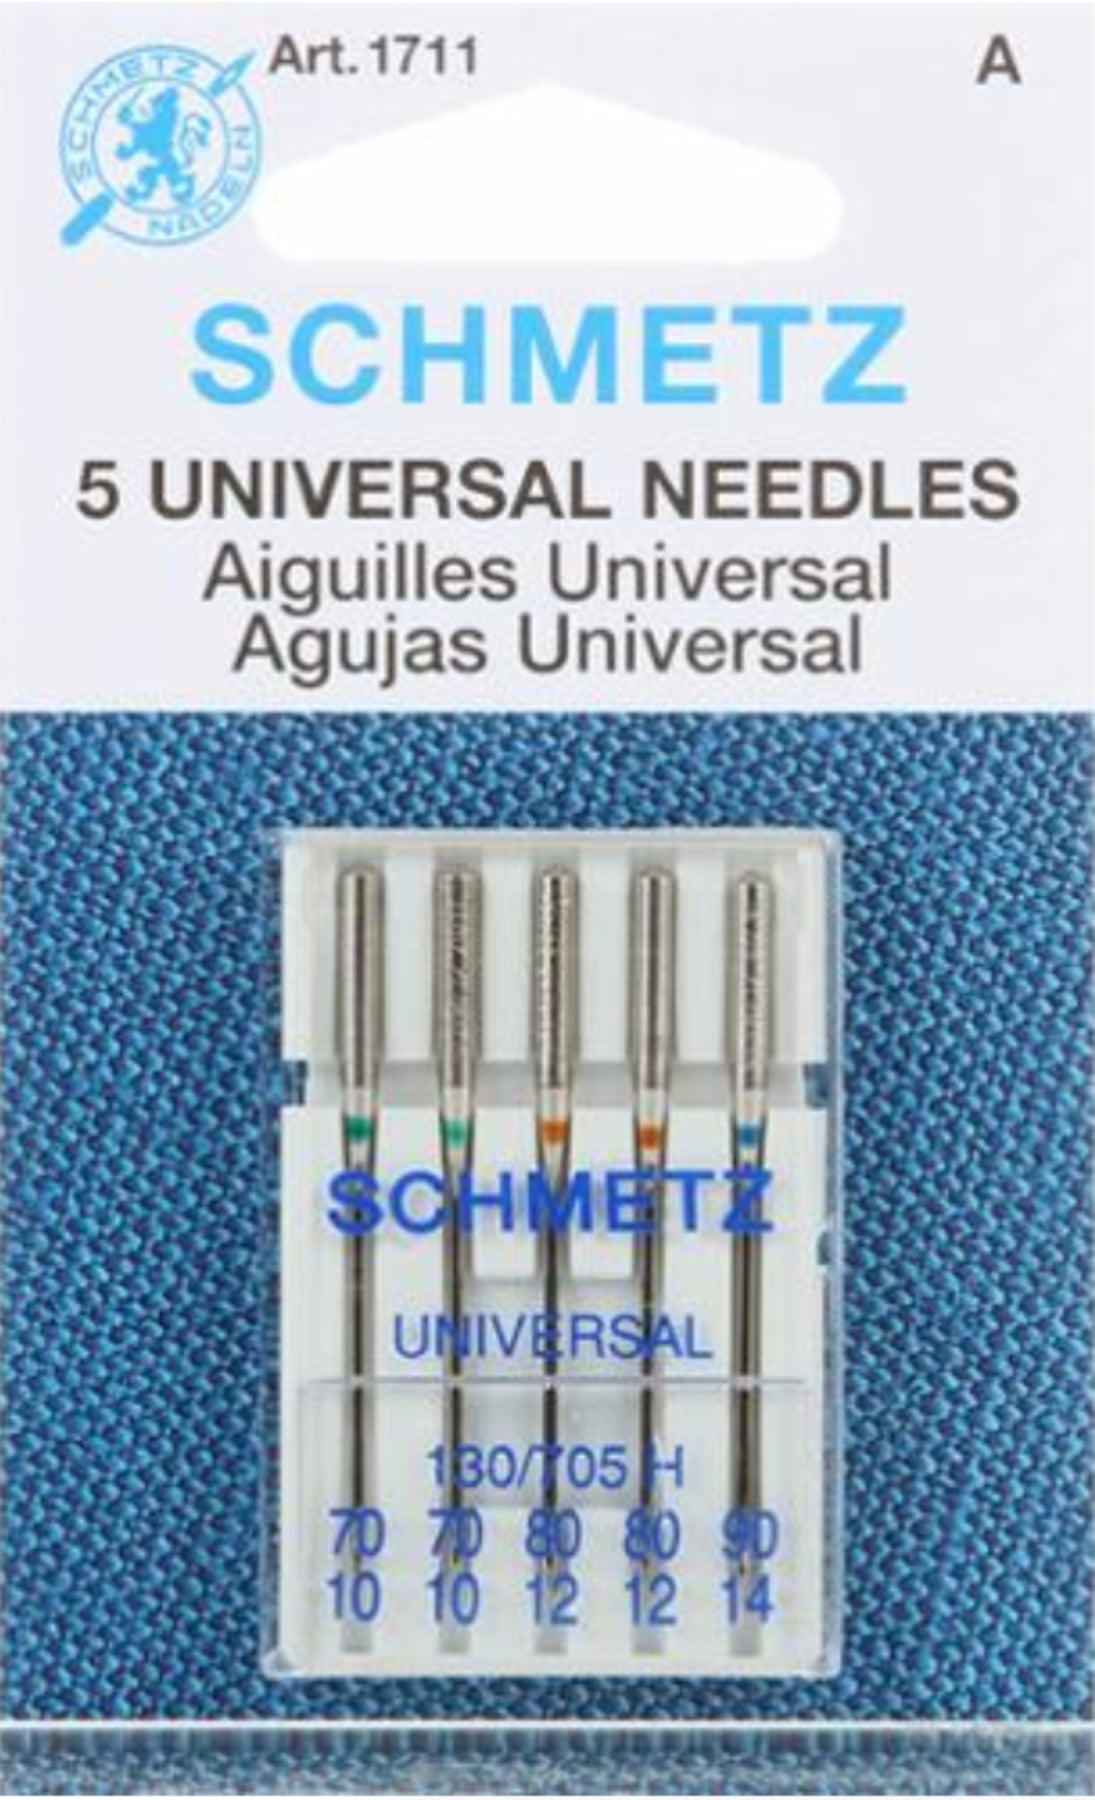 Schmetz Universal Sewing Machine Needles 130/705 H – Brooklyn General Store